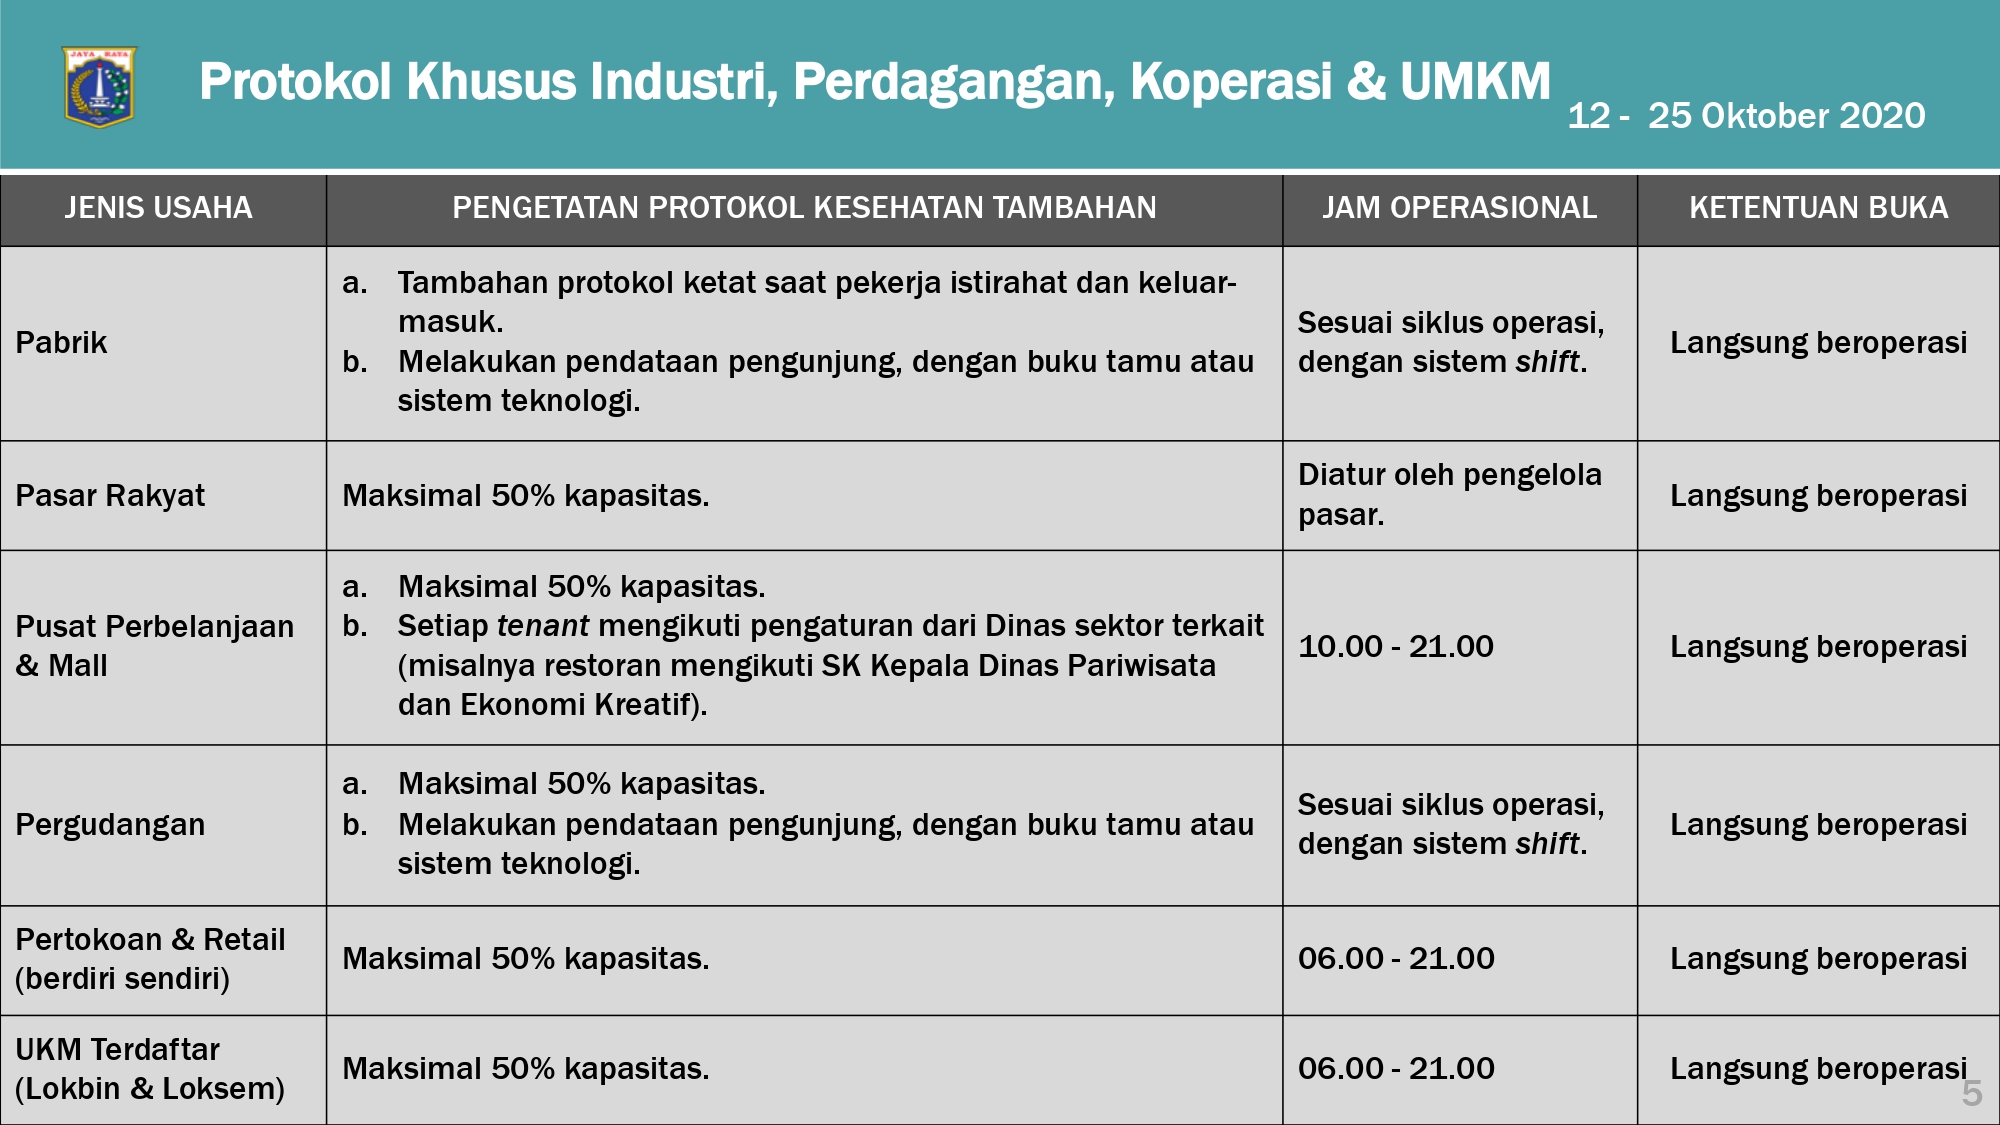 Pengaturan PSBB Transisi DKI Jakarta 12-25 Oktober 2020_page-0005